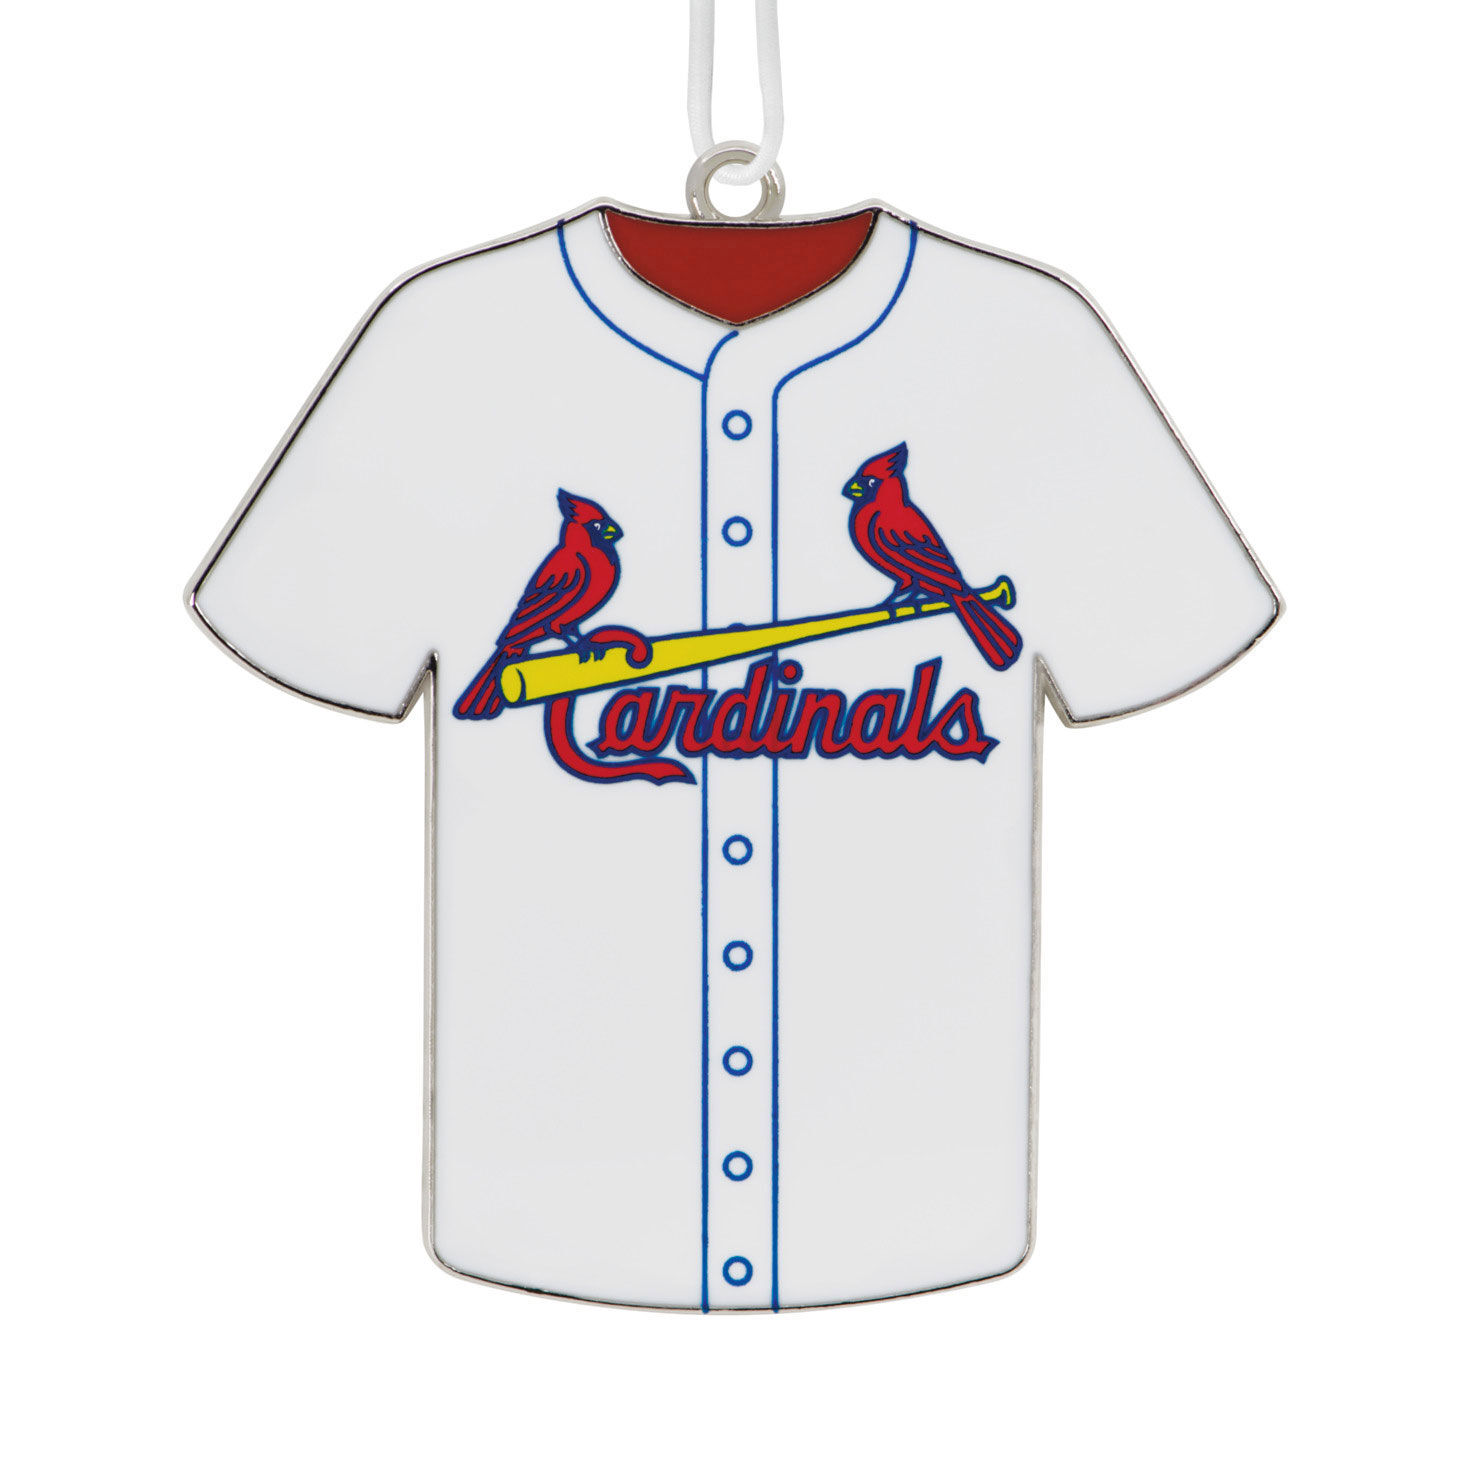 st. louis cardinals mlb jersey 77 St. Louis Cardinals jerseys are